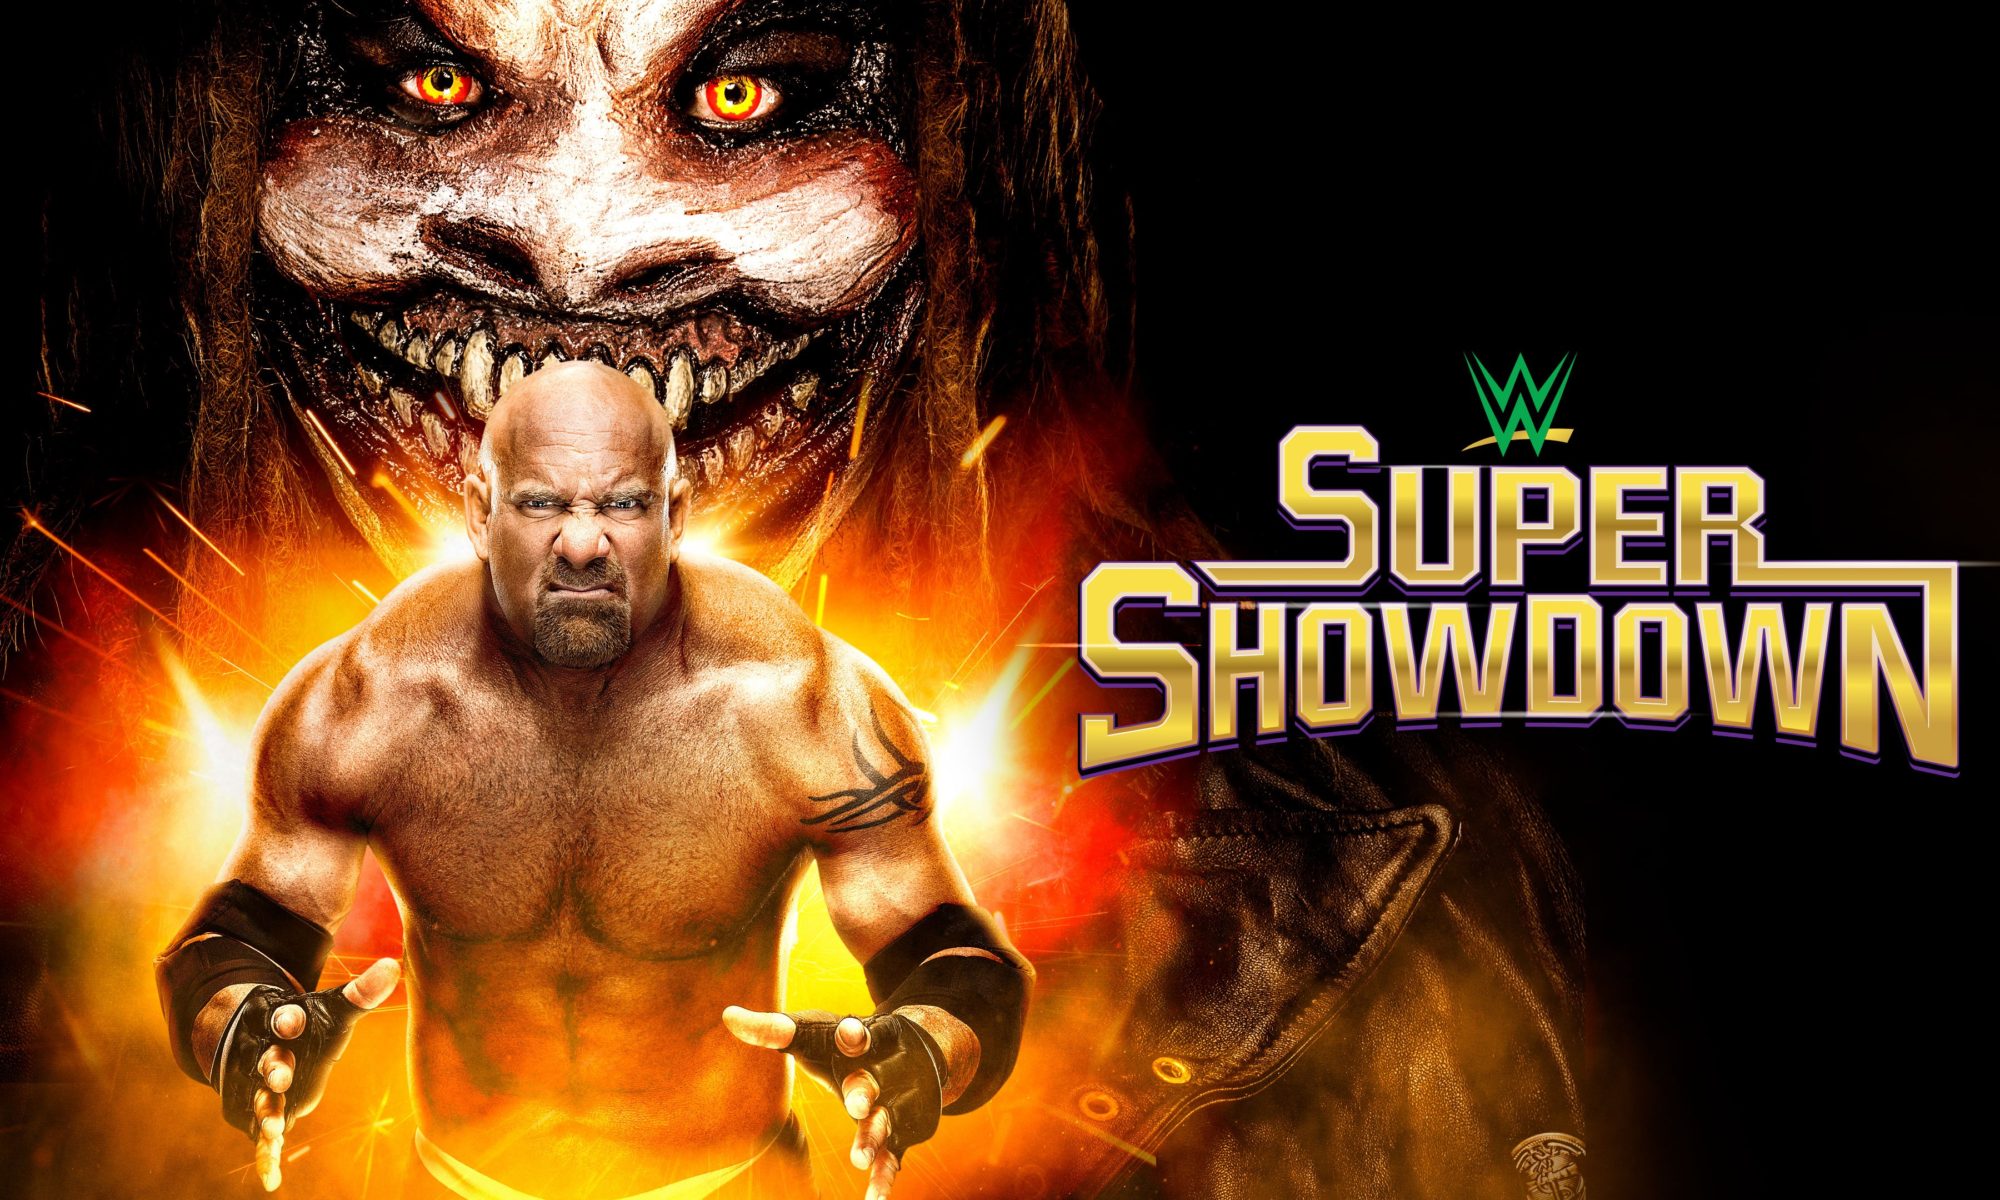 WWE SUPER SHOWDOWN [Review]: The Smark Side Presents 'Oil Money V'.